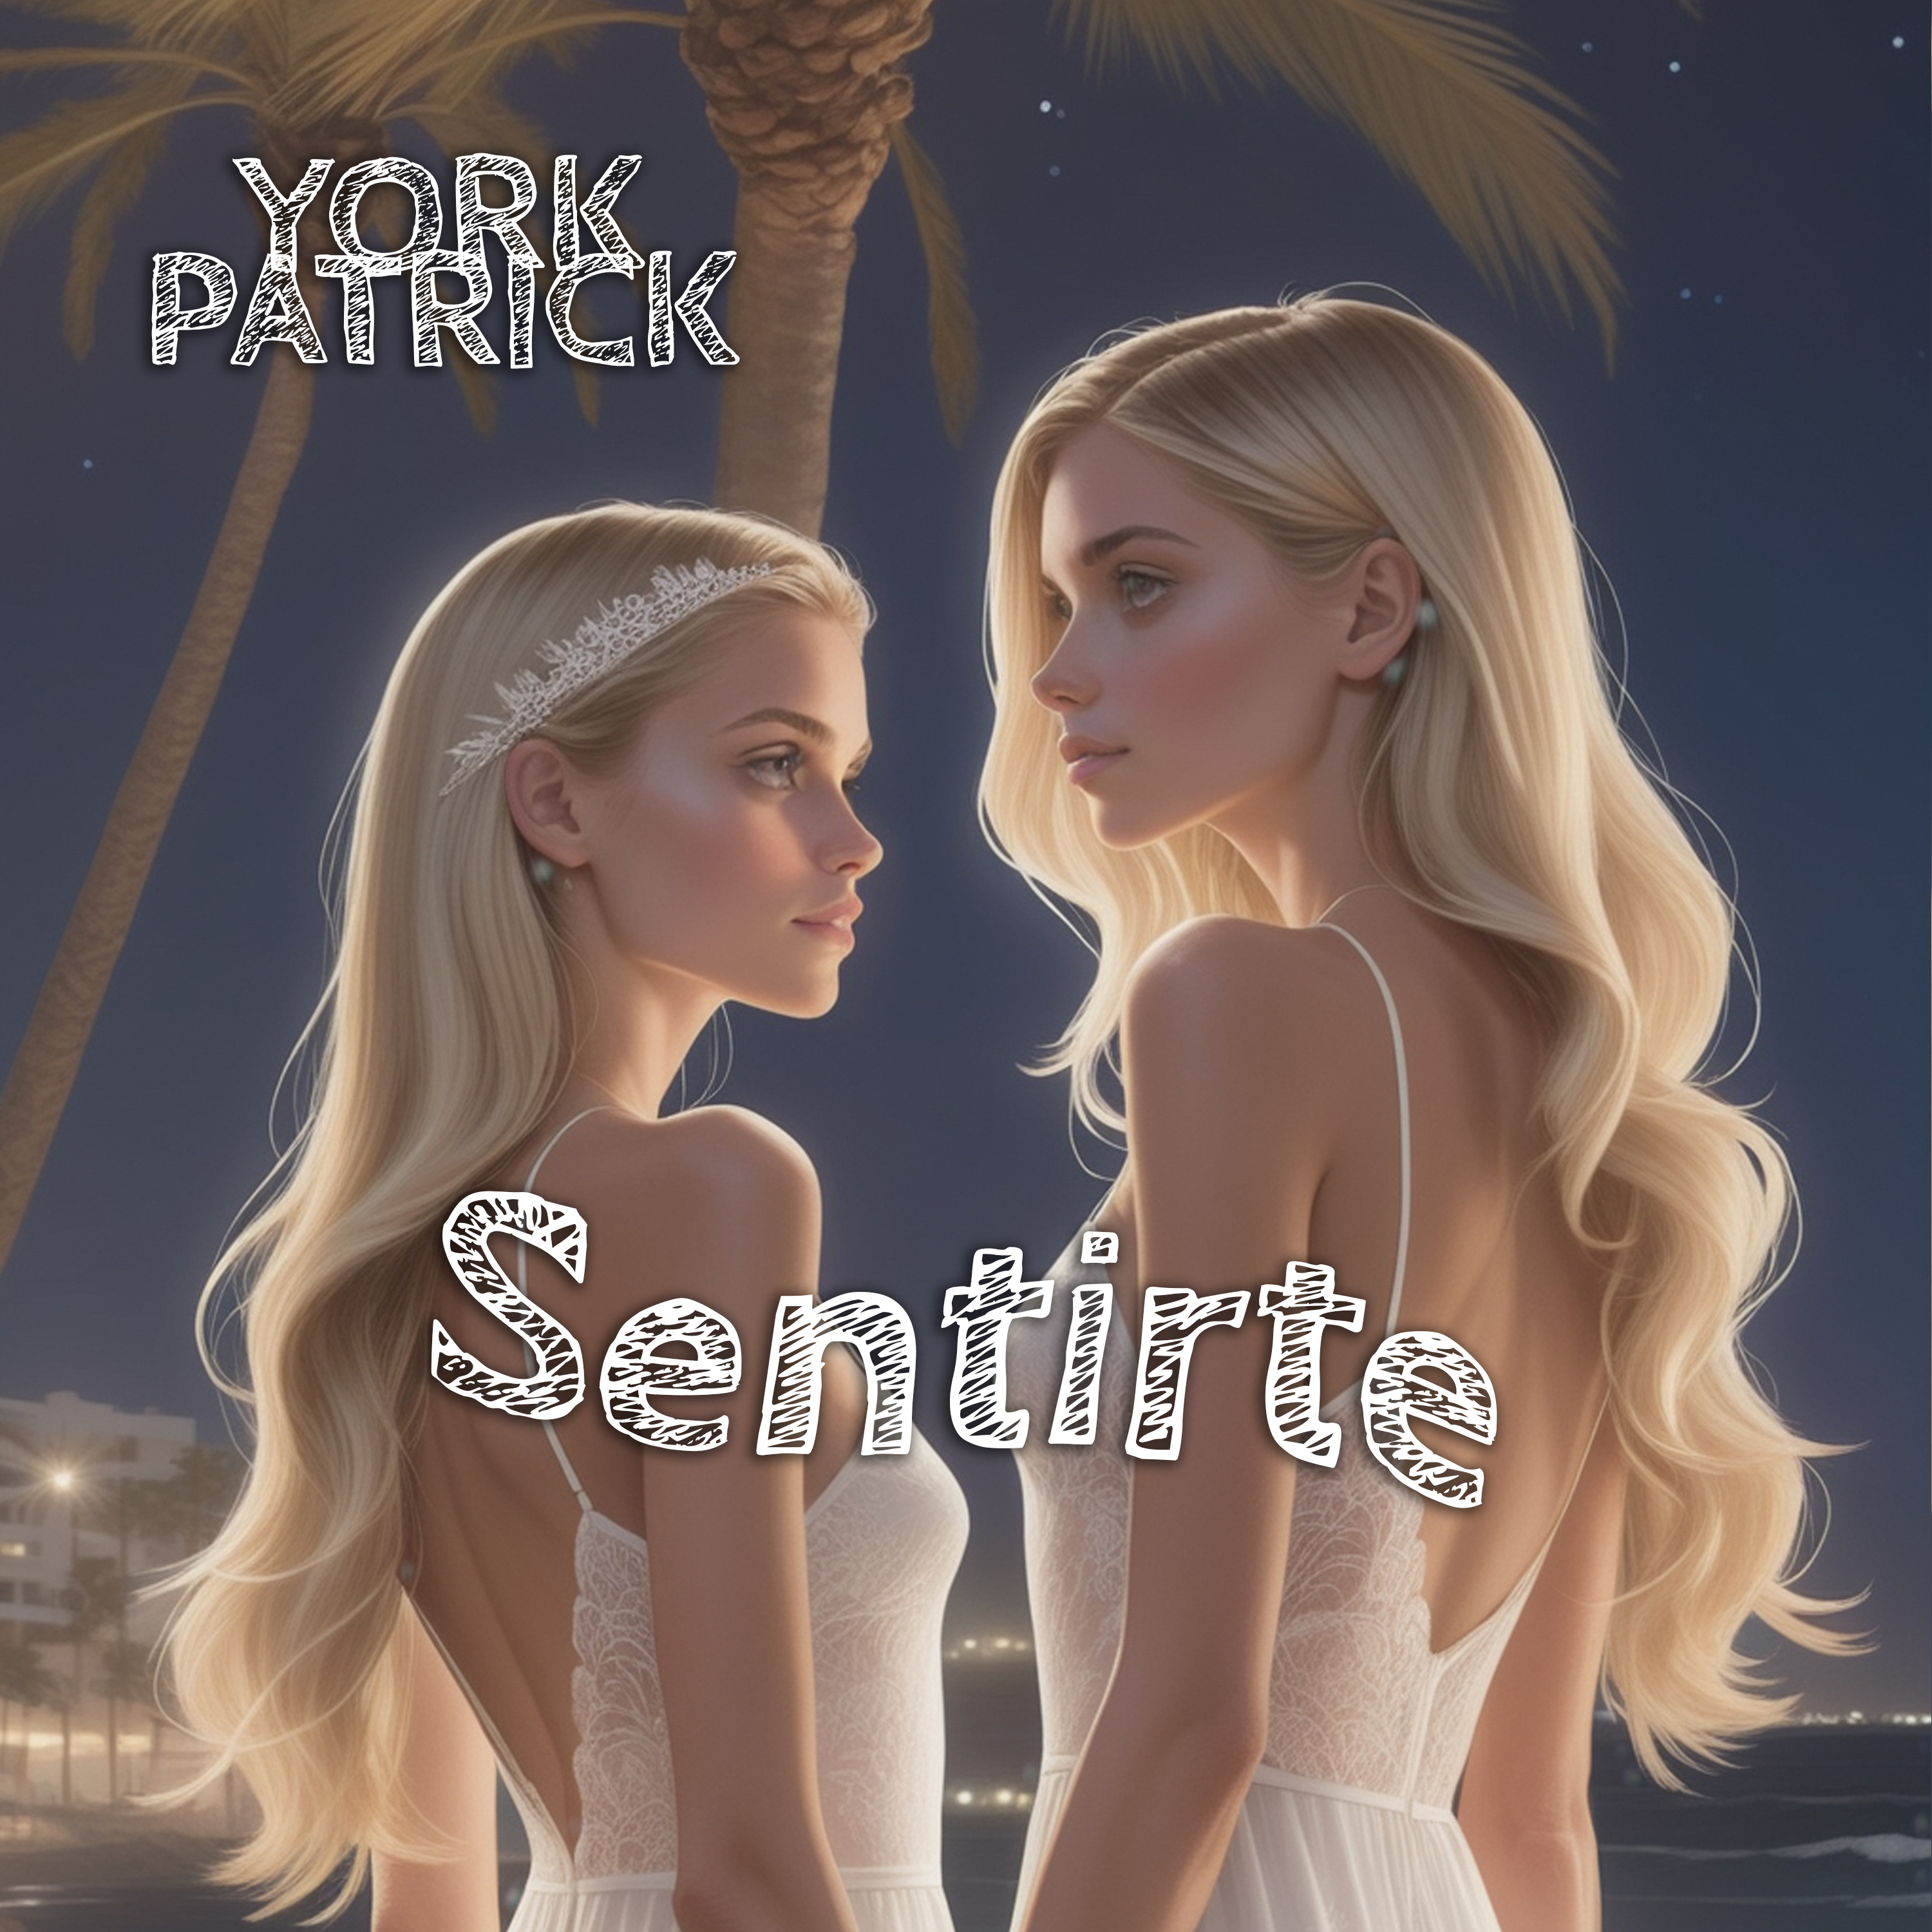 York Patrick Sentirte Cover